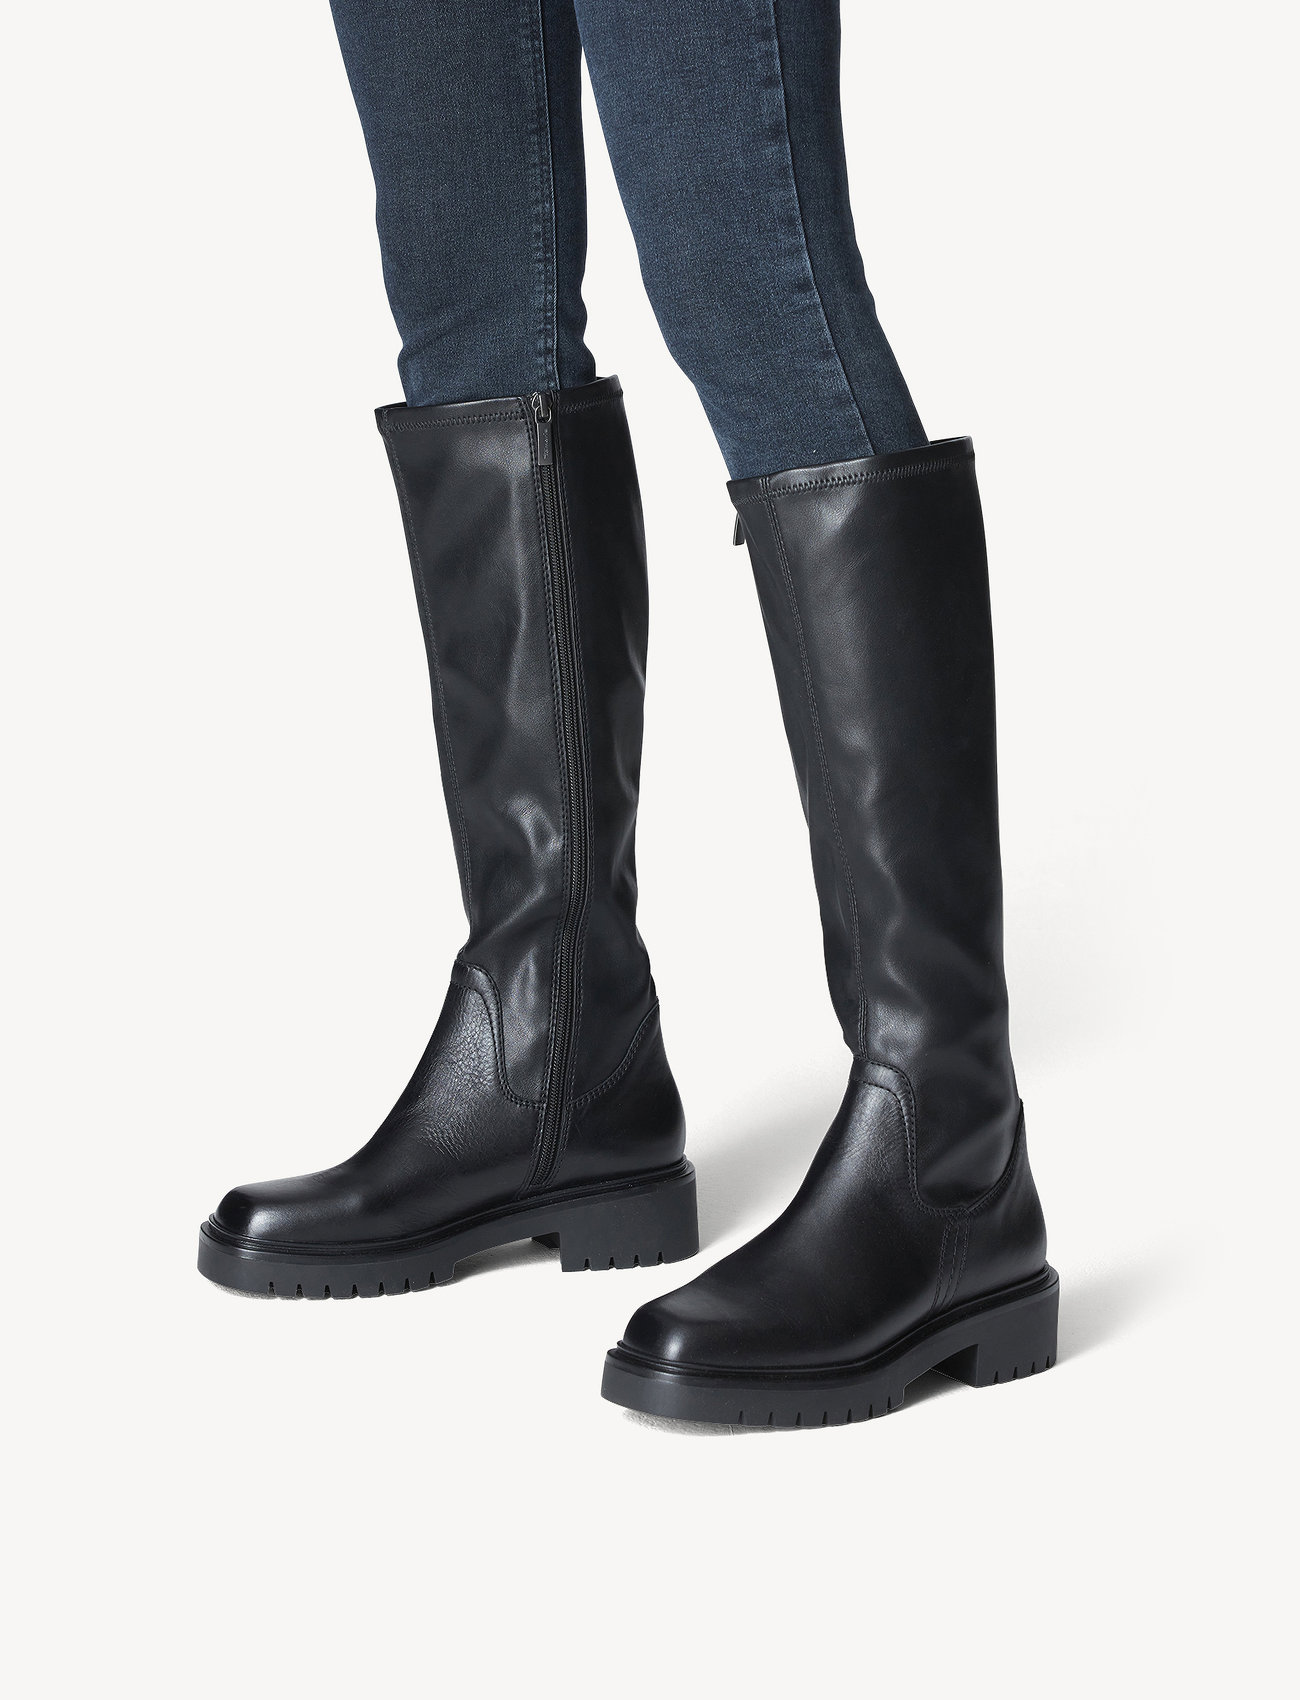 hagl Beloved over Tamaris Woms Boots (Black/Sort) - 486 kr | Boozt.com